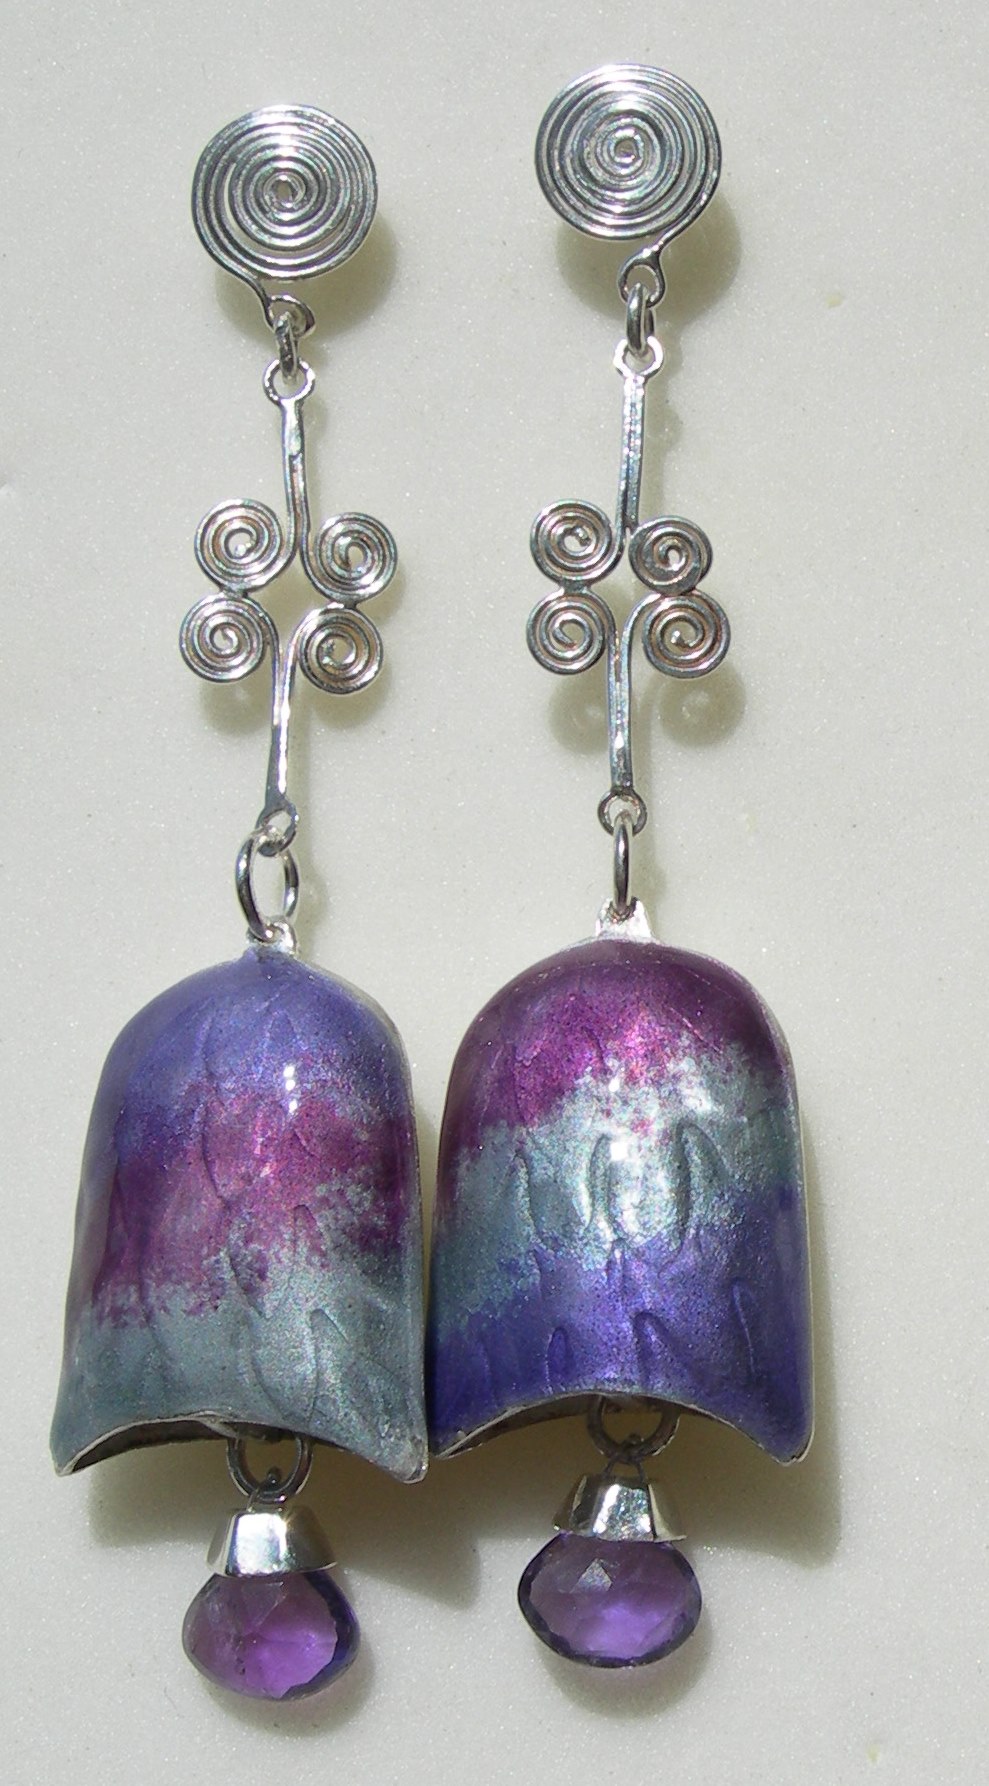 Bell earrings in sterling silver with amethyst